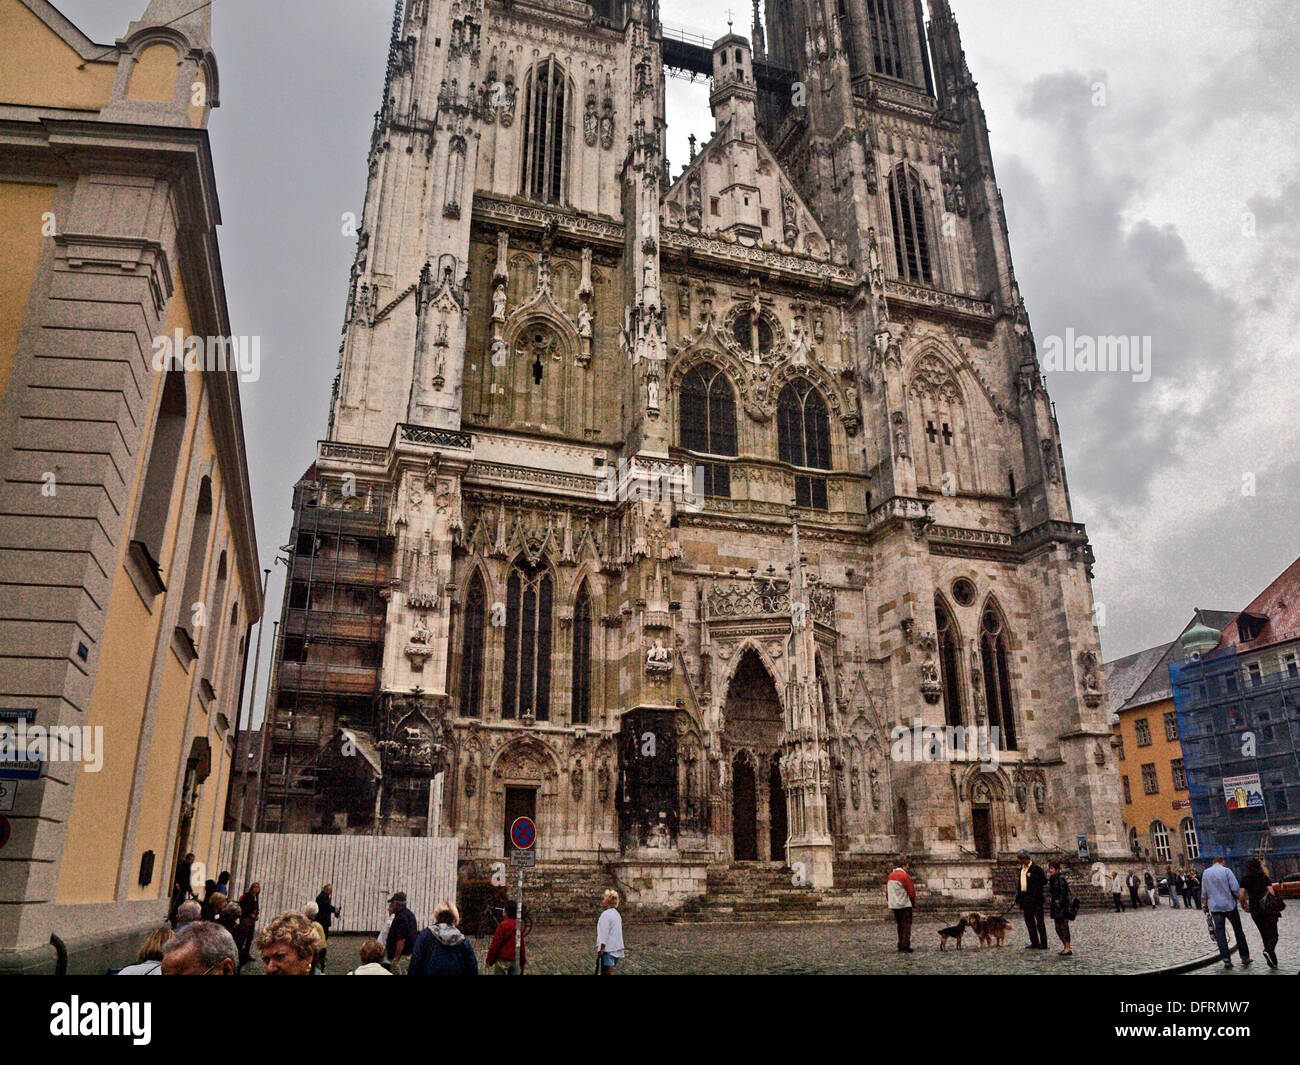 Regensburger Dom gótica de la fachada occidental de la Catedral de Regensburg, Regensburg, Alemania Foto de stock